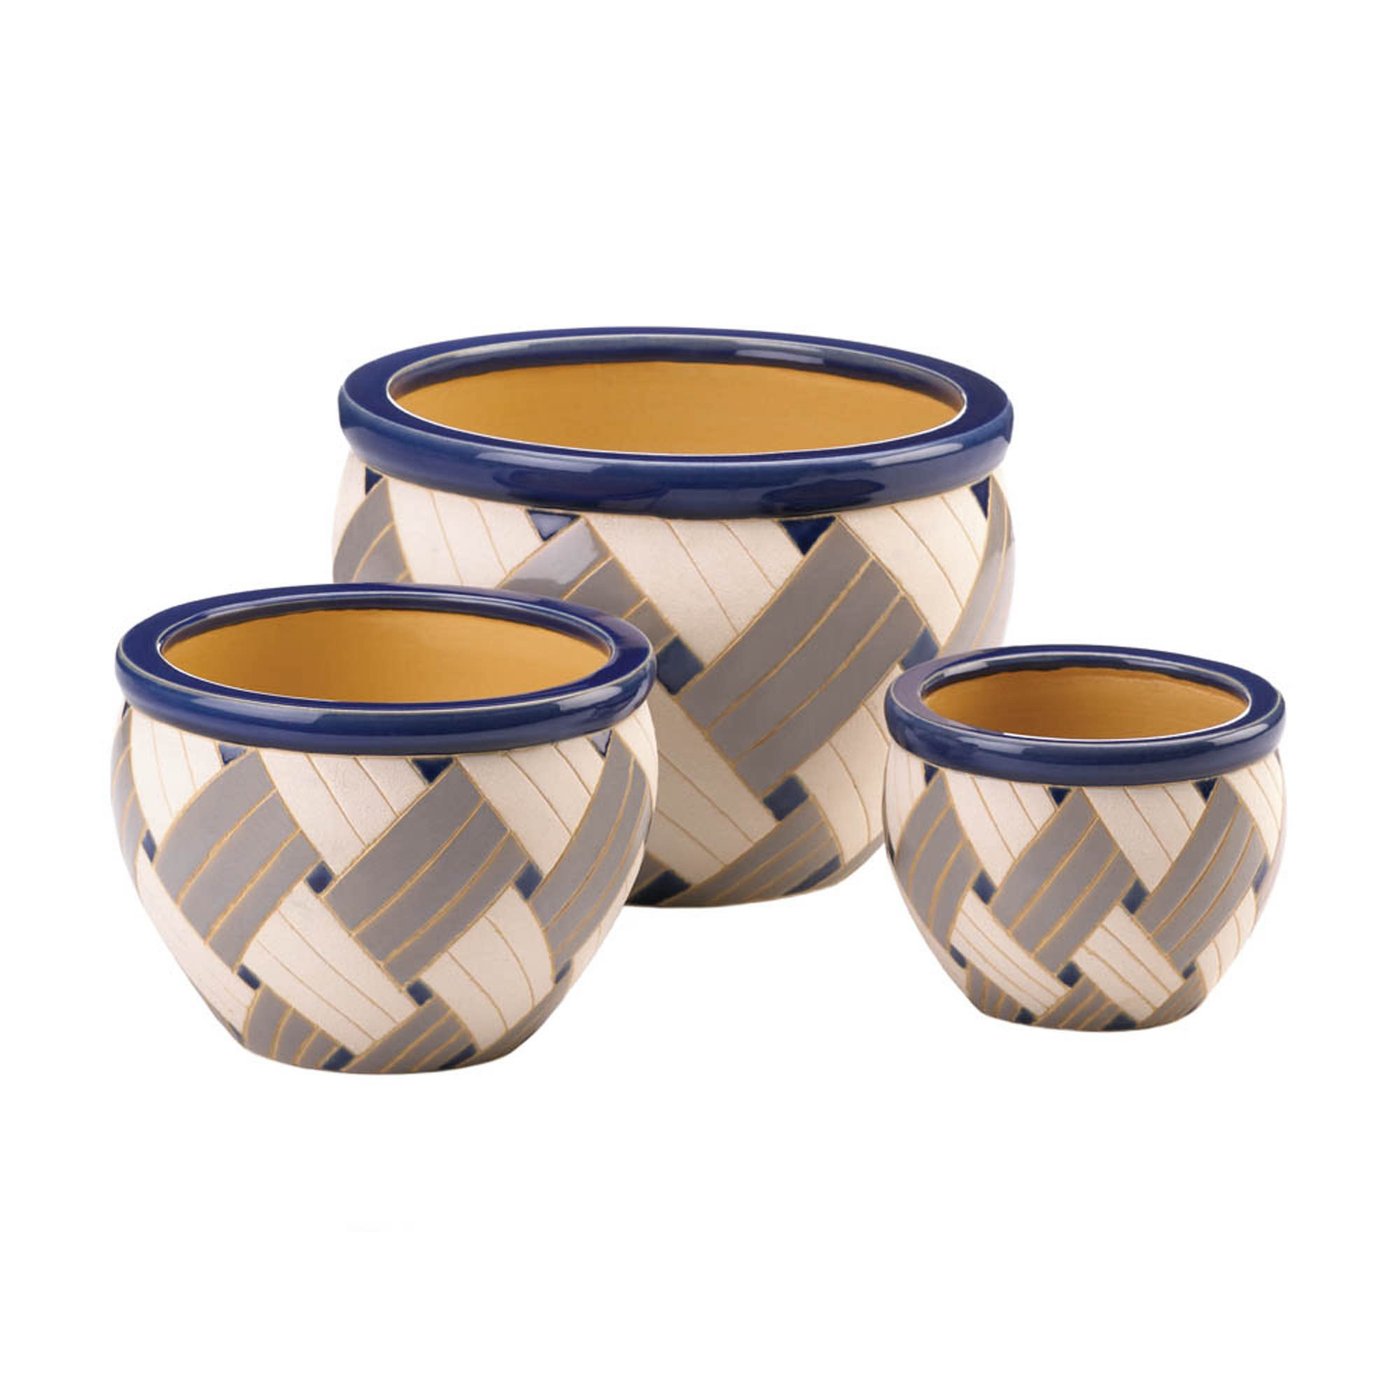 Blue Woven Design Ceramic Planter Set Accent Plus